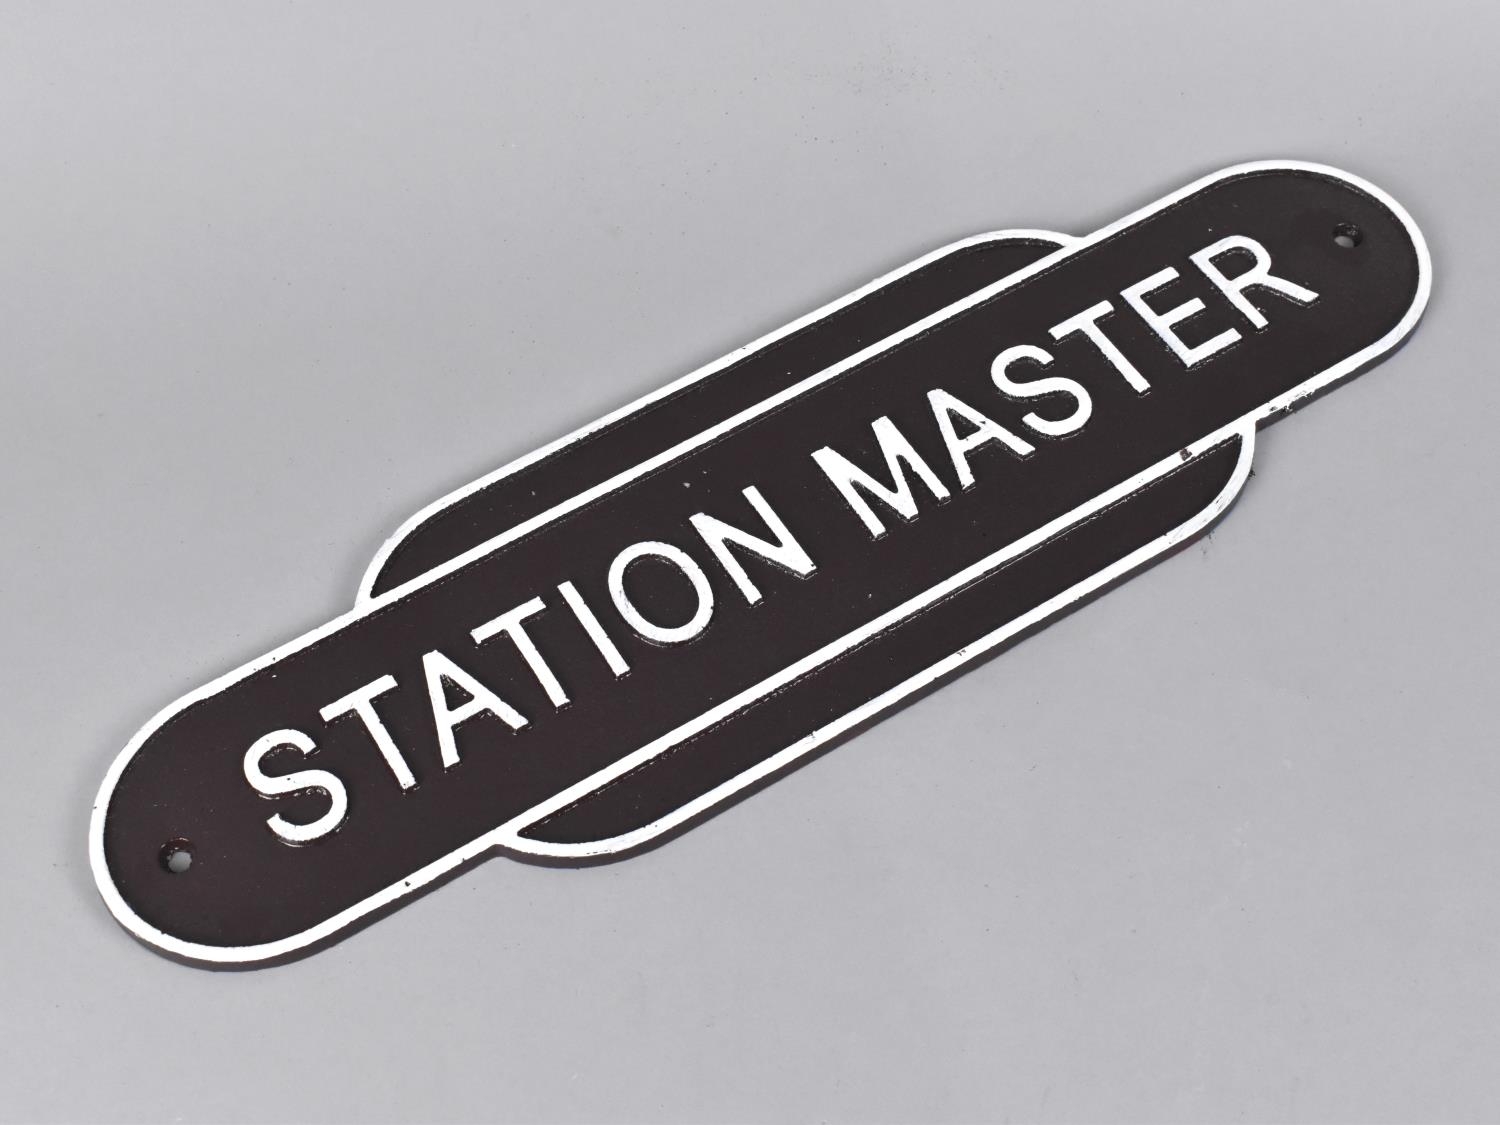 A Reproduction Cast Metal Railway Sign, "Station Master", 28cms Wide, (Plus VAT)